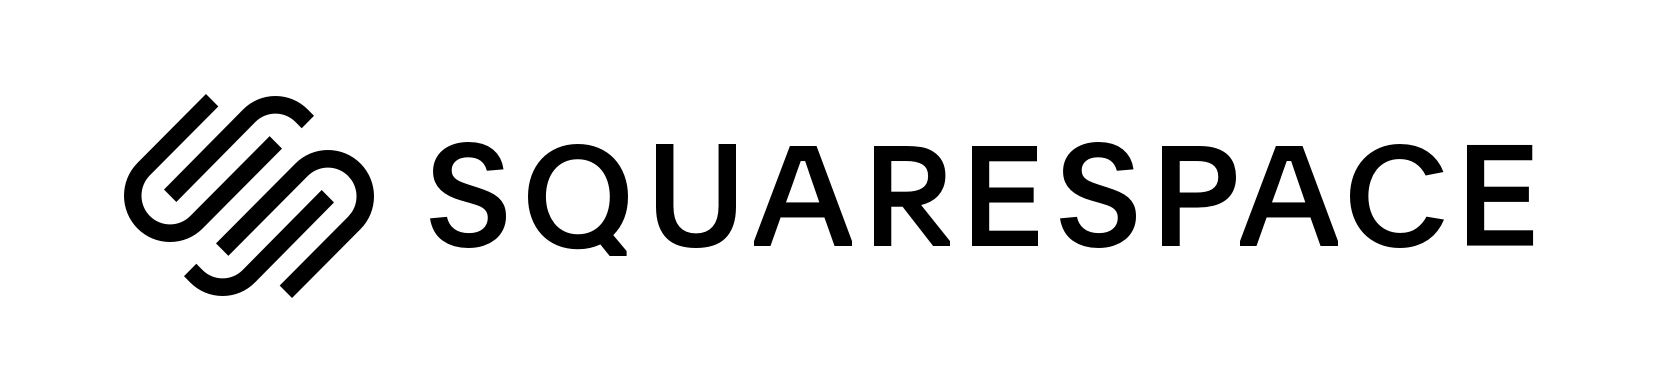 squarespace logo horizontal black - How To Make Your Squarespace Site Look Expensive And Custom